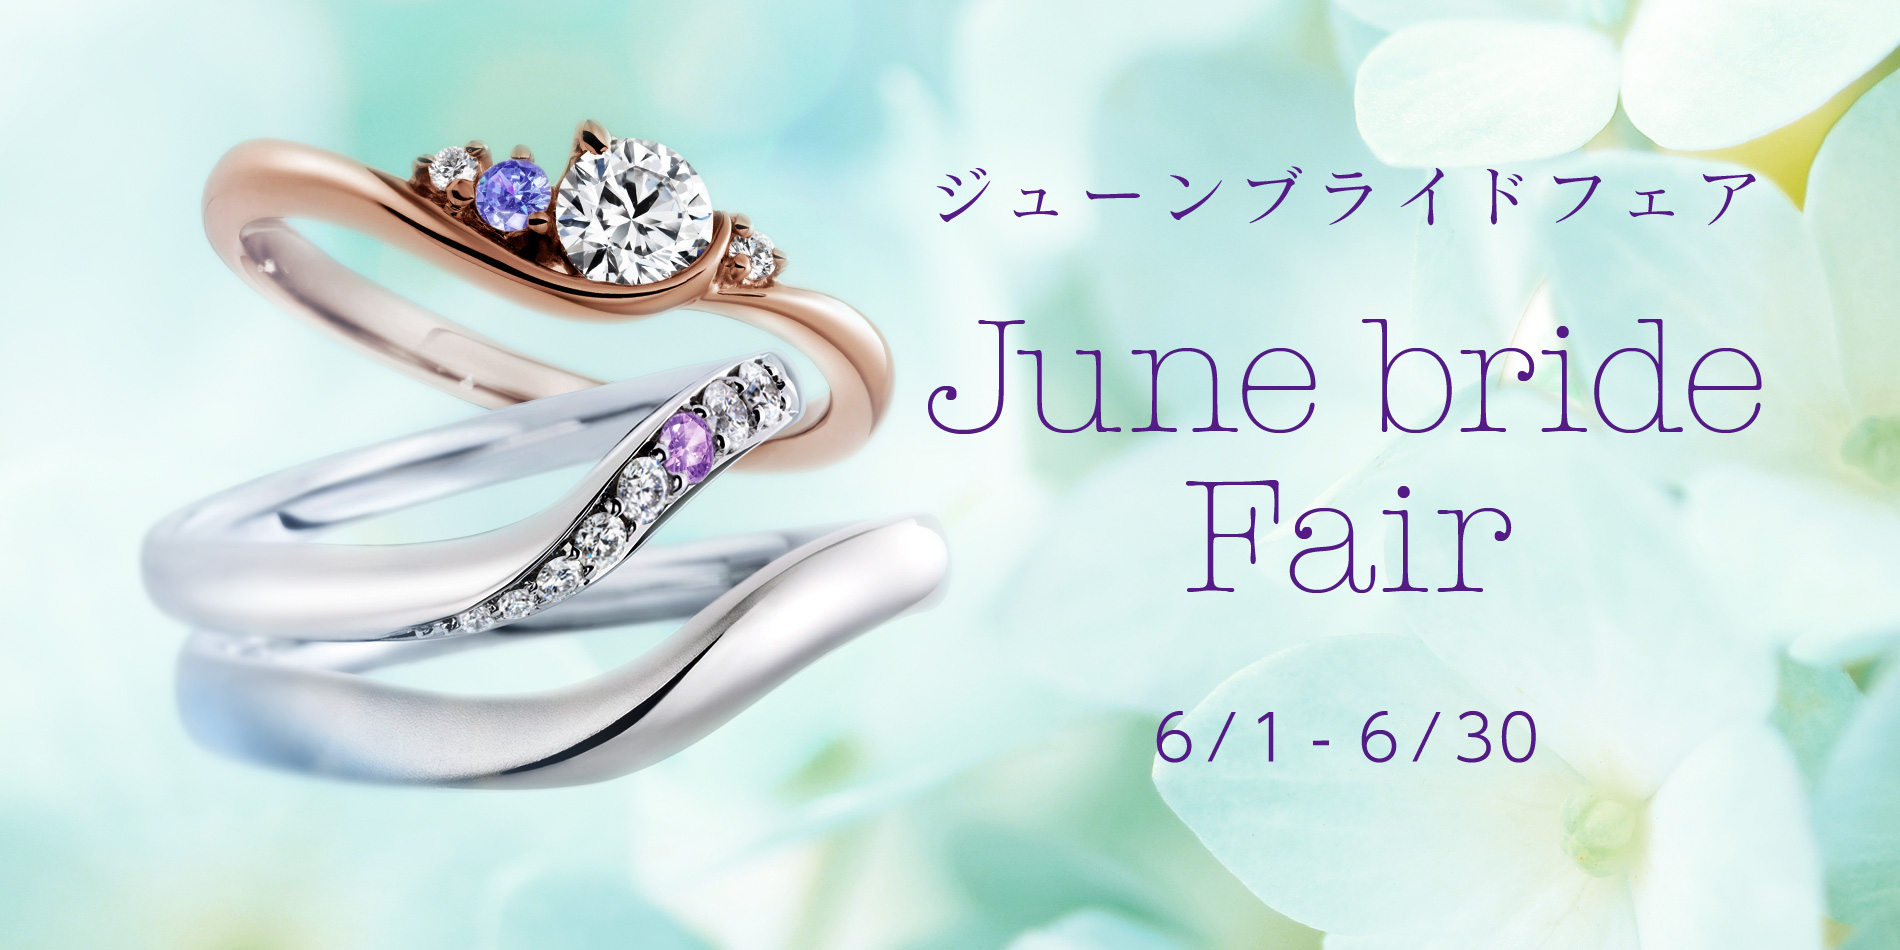 「June bride Fair」開催